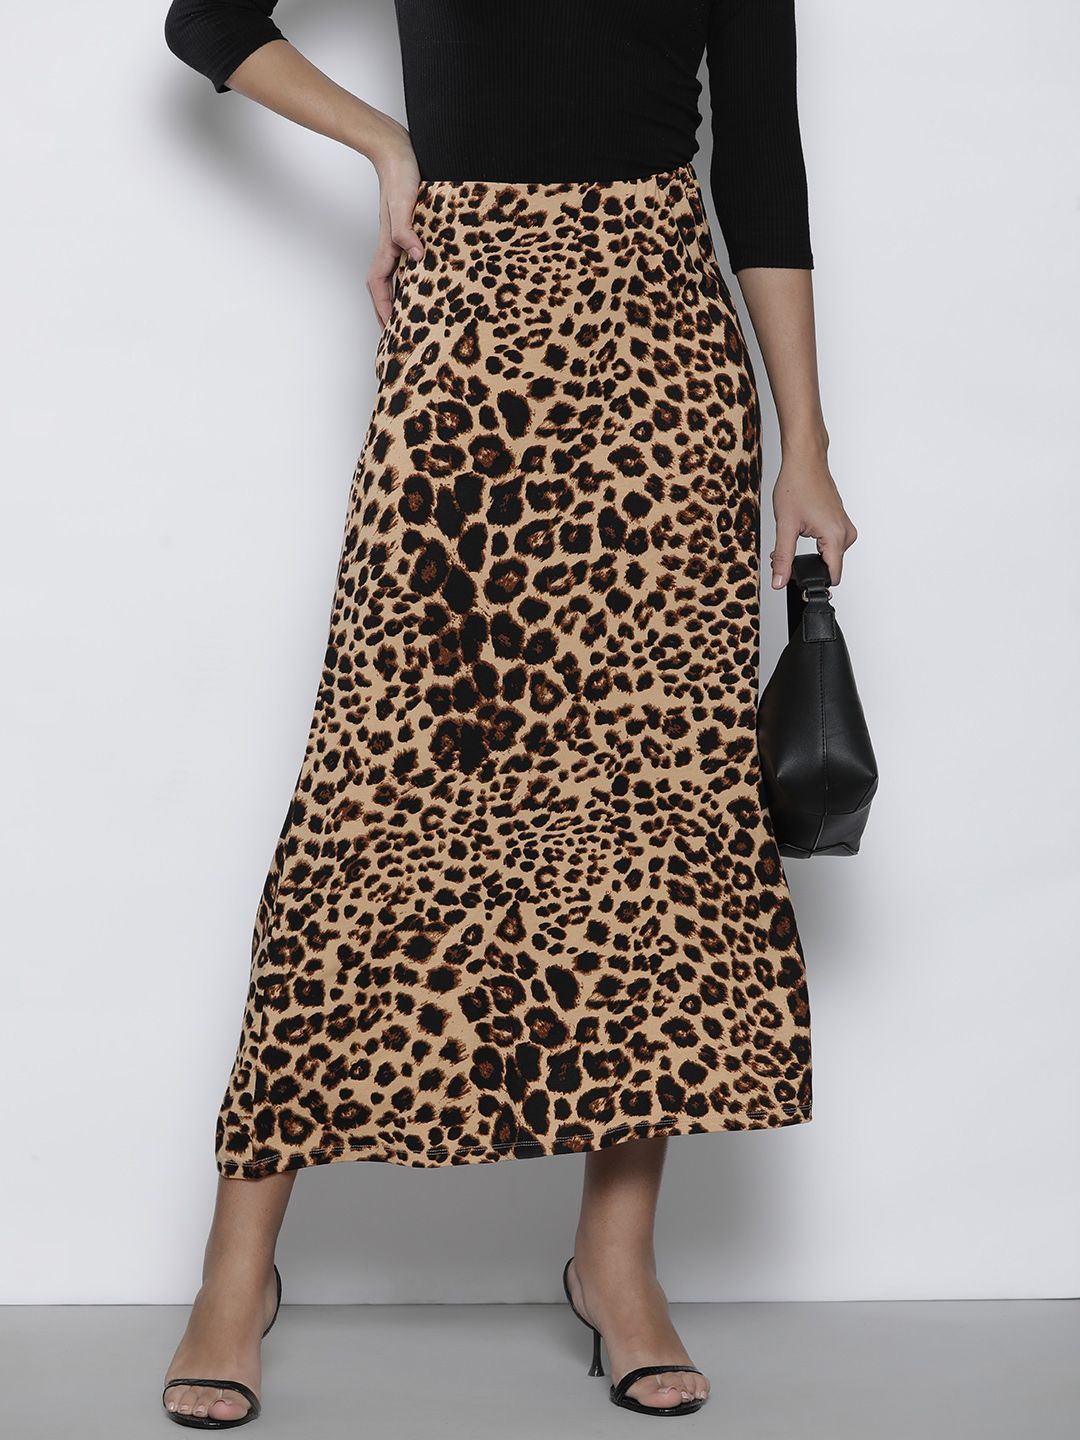 DOROTHY PERKINS Animal Printed A-Line Midi Skirt Price in India